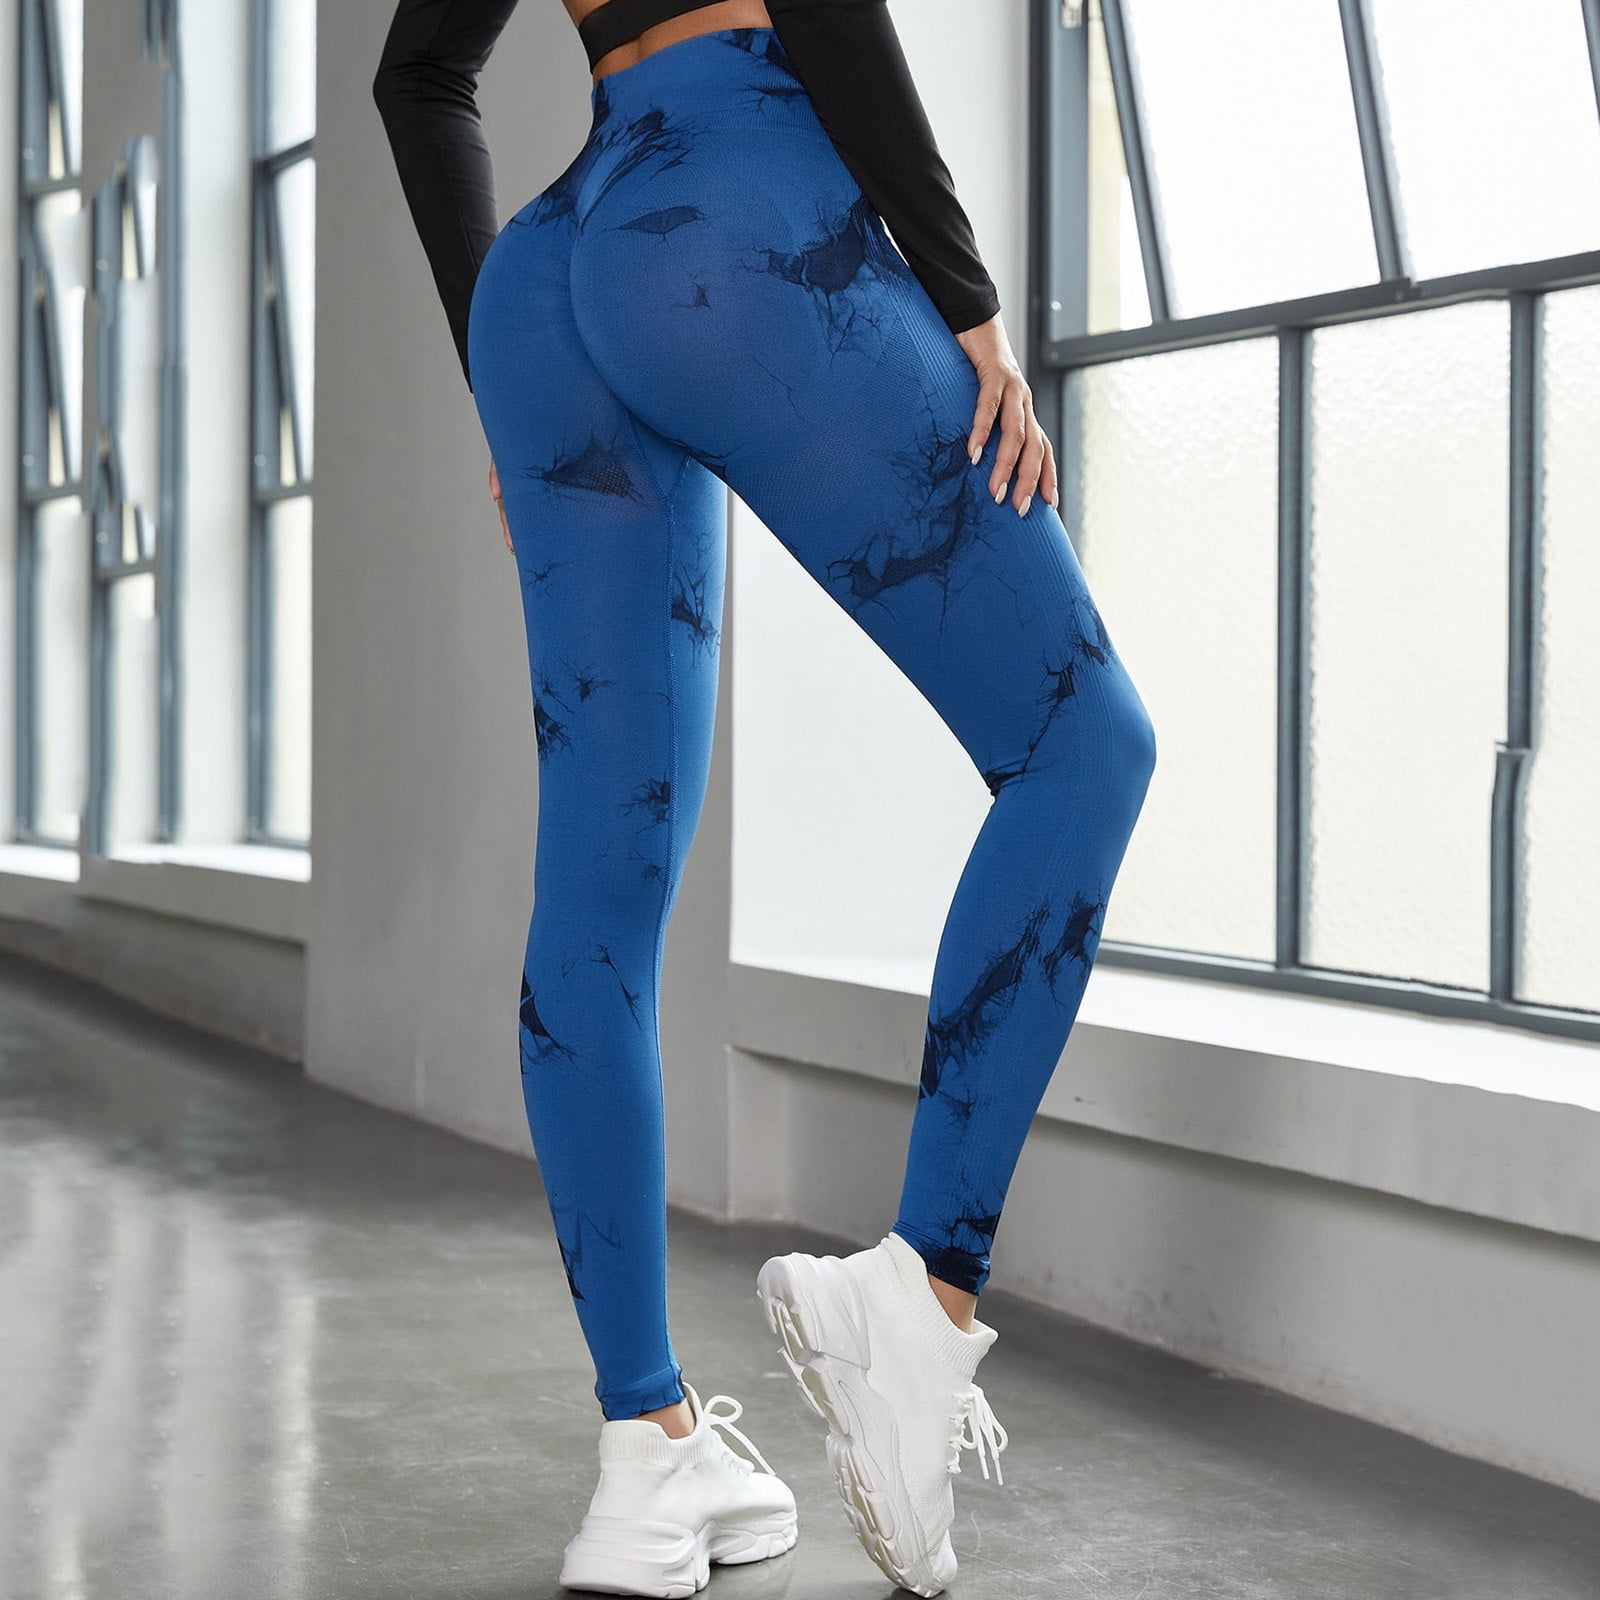 Gubotare Yoga Pants Womens Leggings-No See-Through High Waisted Tummy  Control Yoga Pants Workout Running Legging,Blue L